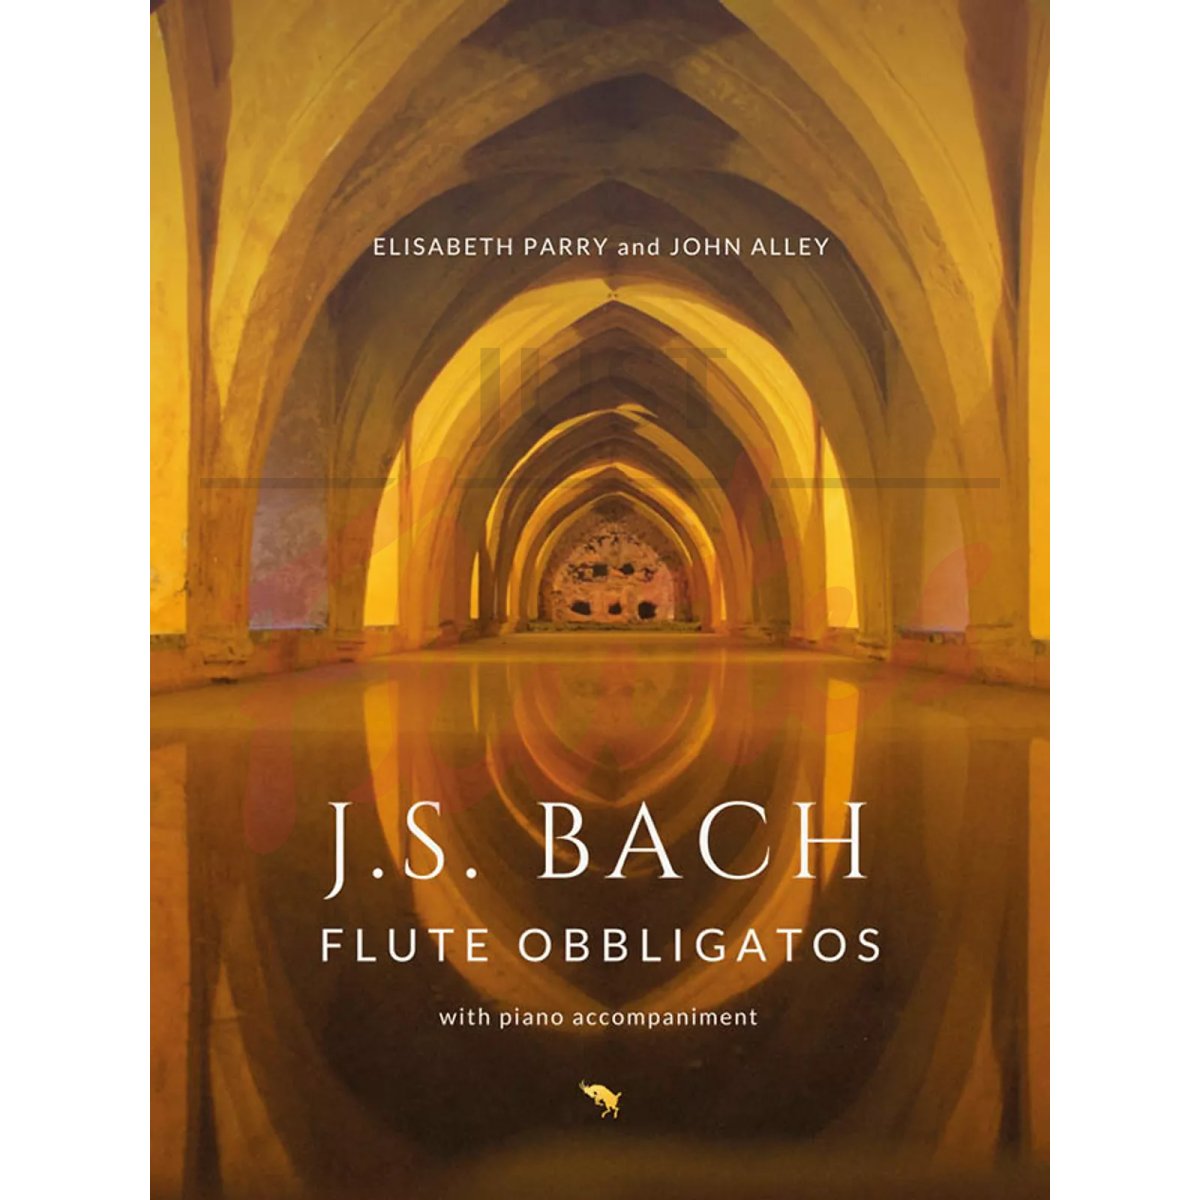 Flute Obbligatos with Piano Accompaniment, Volume 1